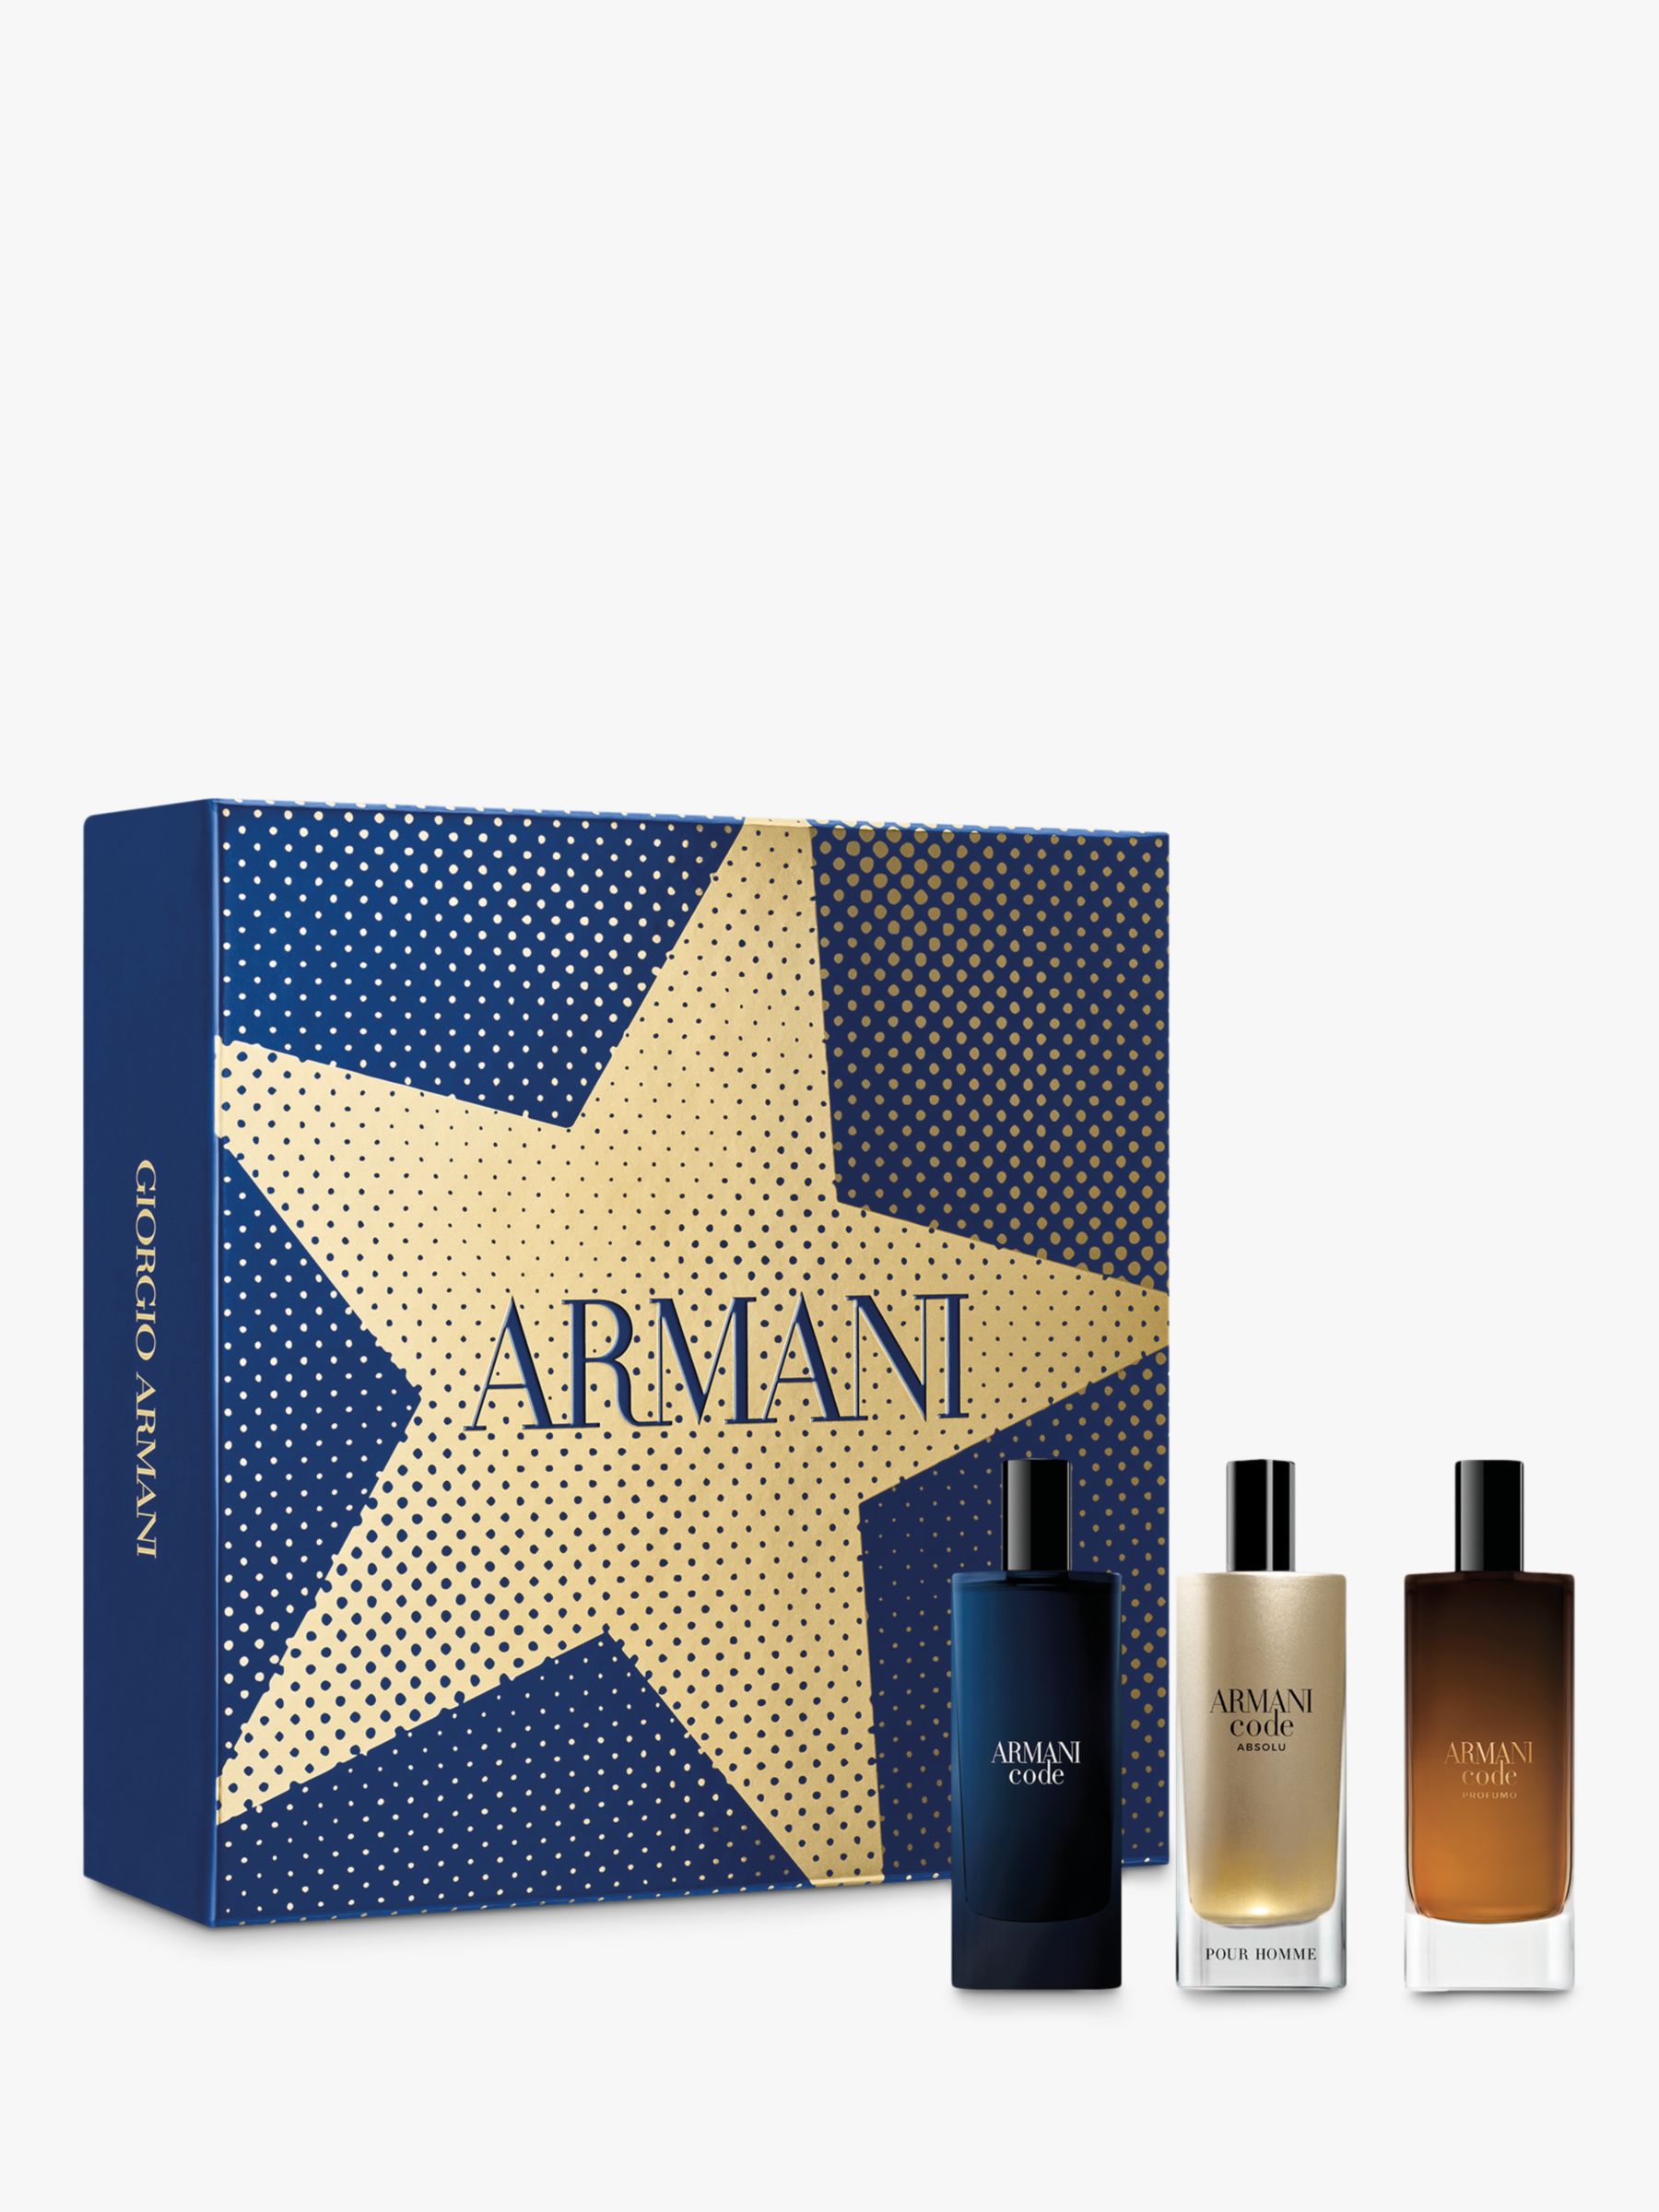 giorgio armani men's miniature fragrance gift set